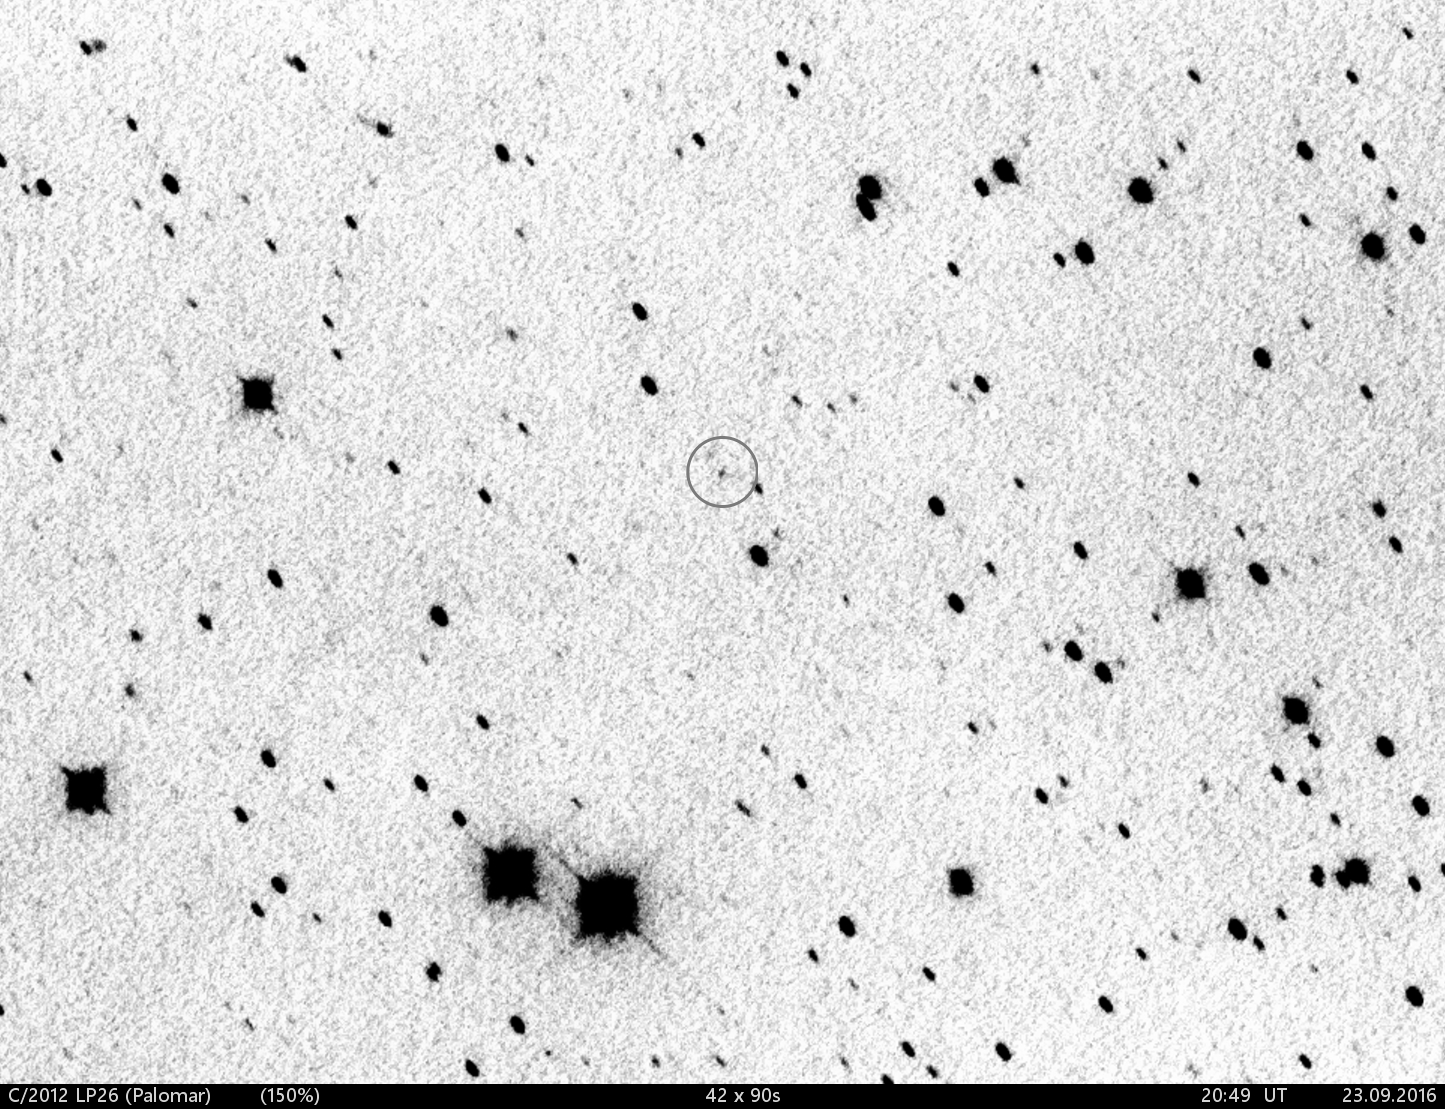 kometa C/2012 LP26 (Palomar)